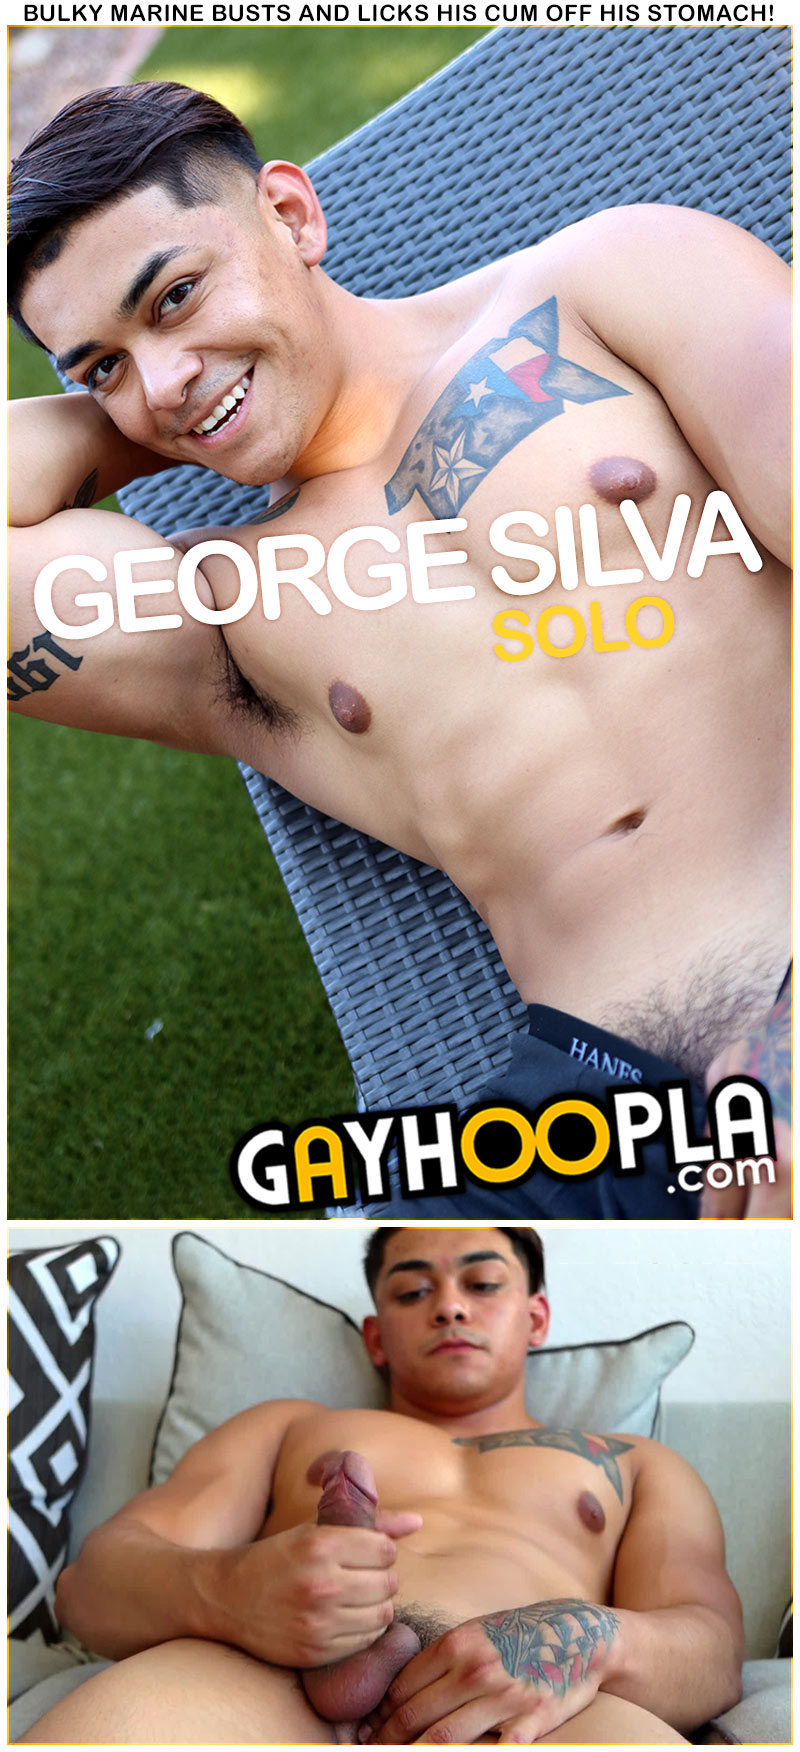 George Silva's Solo at GayHoopla